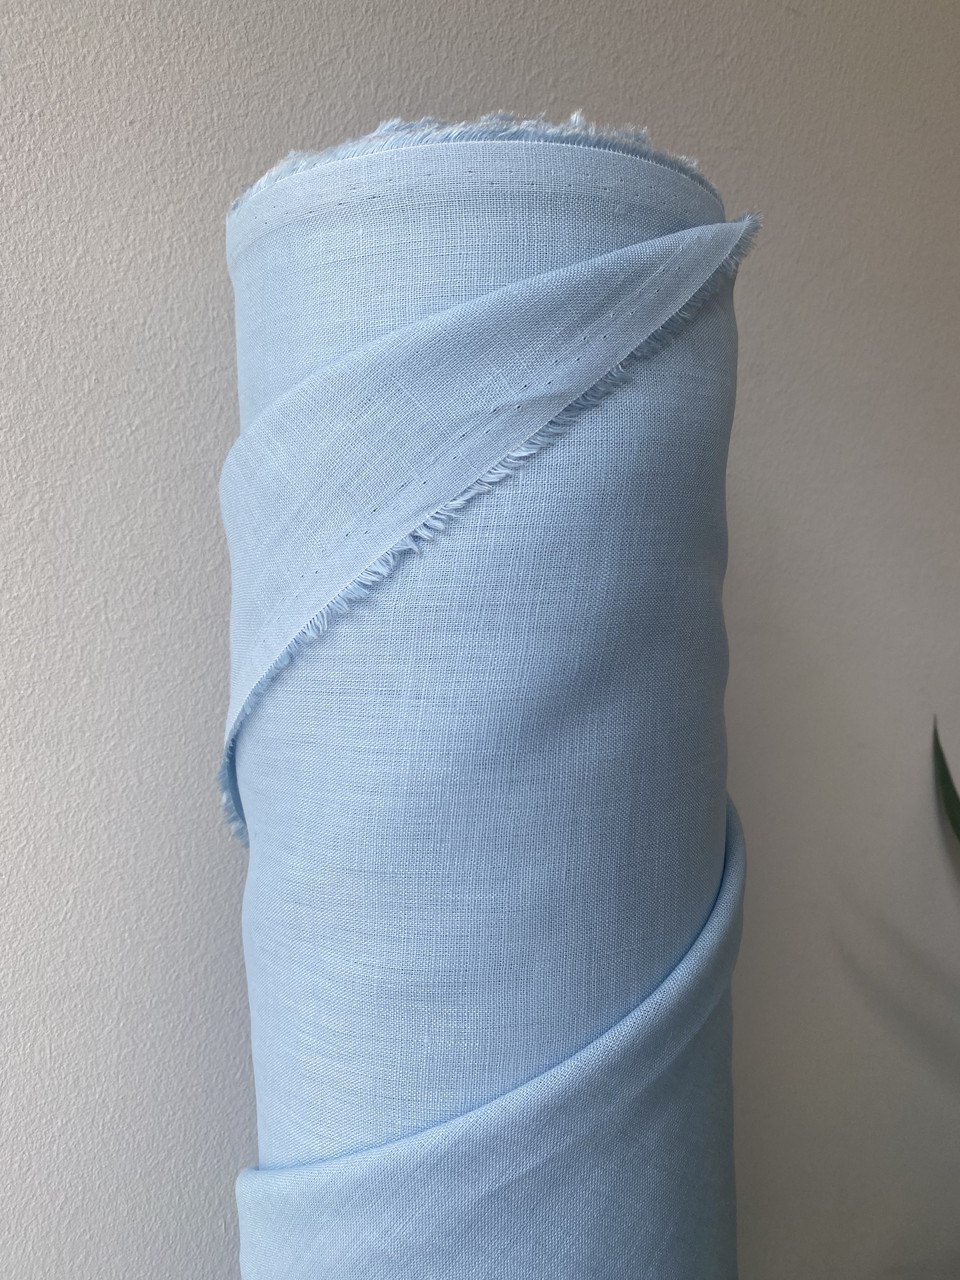 Небесно-блакитна сорочково-платтєва лляна тканина, 100% льон, колір 1305/185